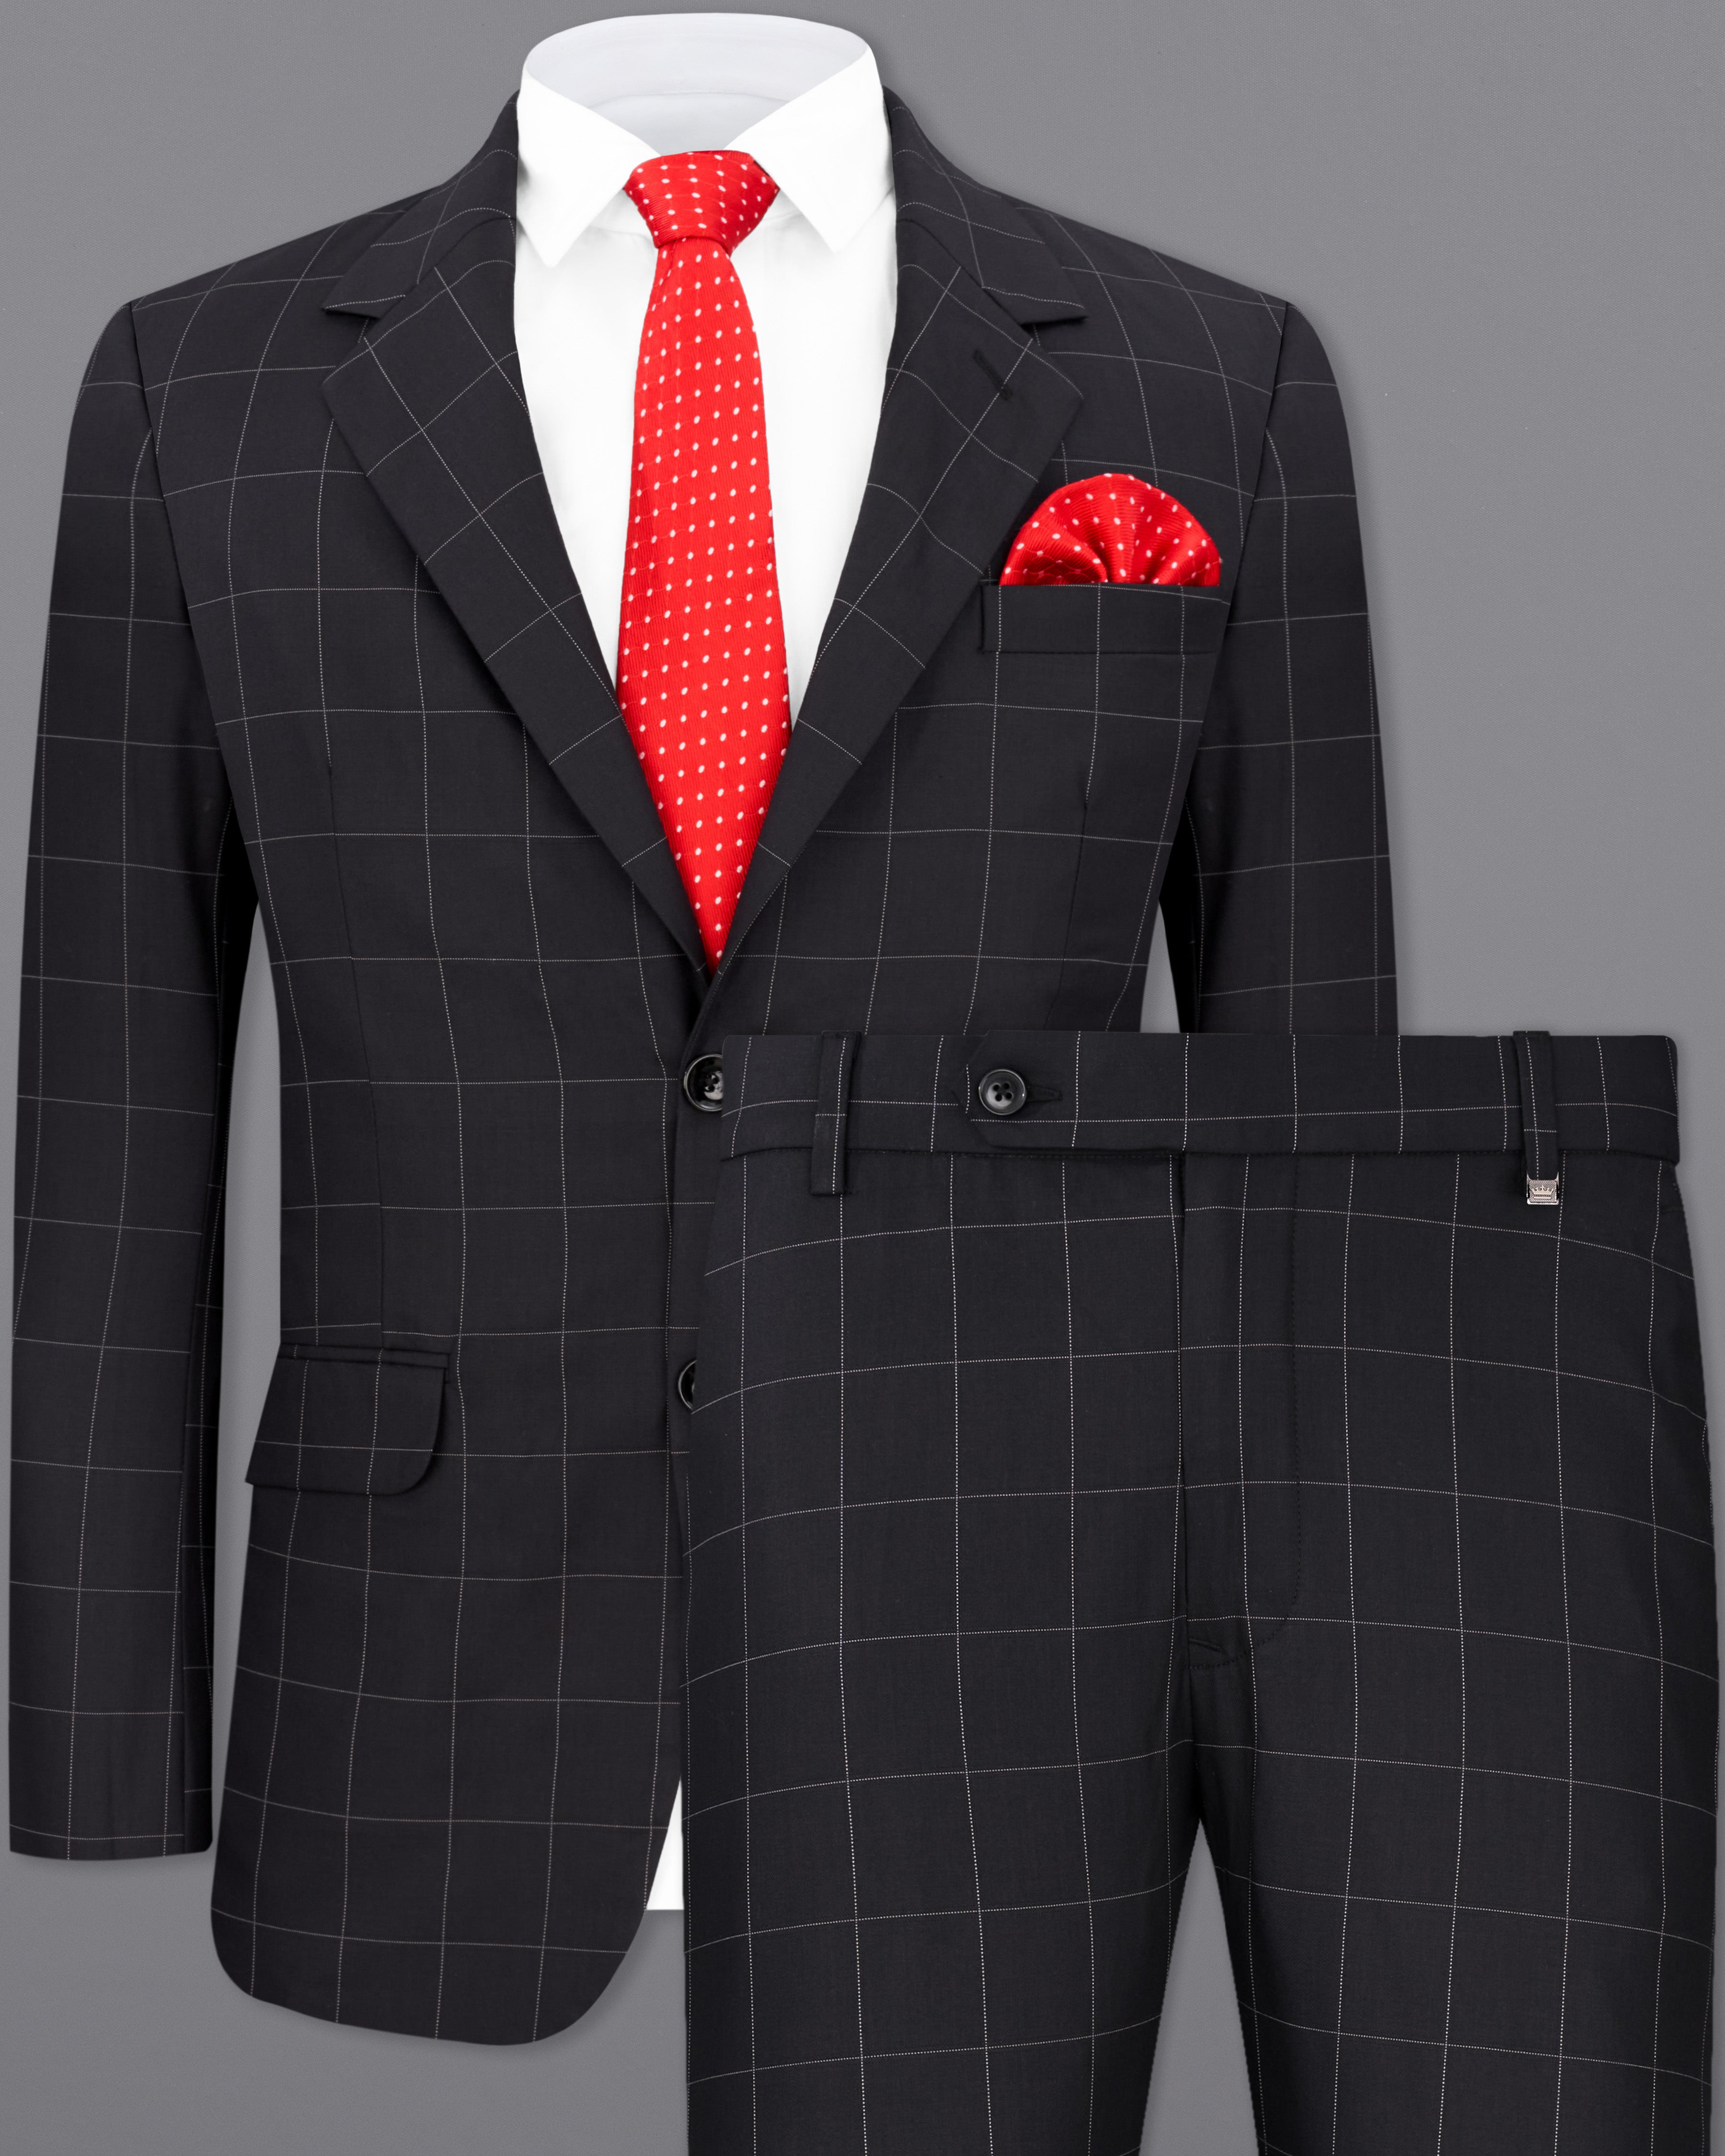 ASOS DESIGN skinny suit in black and beige check | ASOS